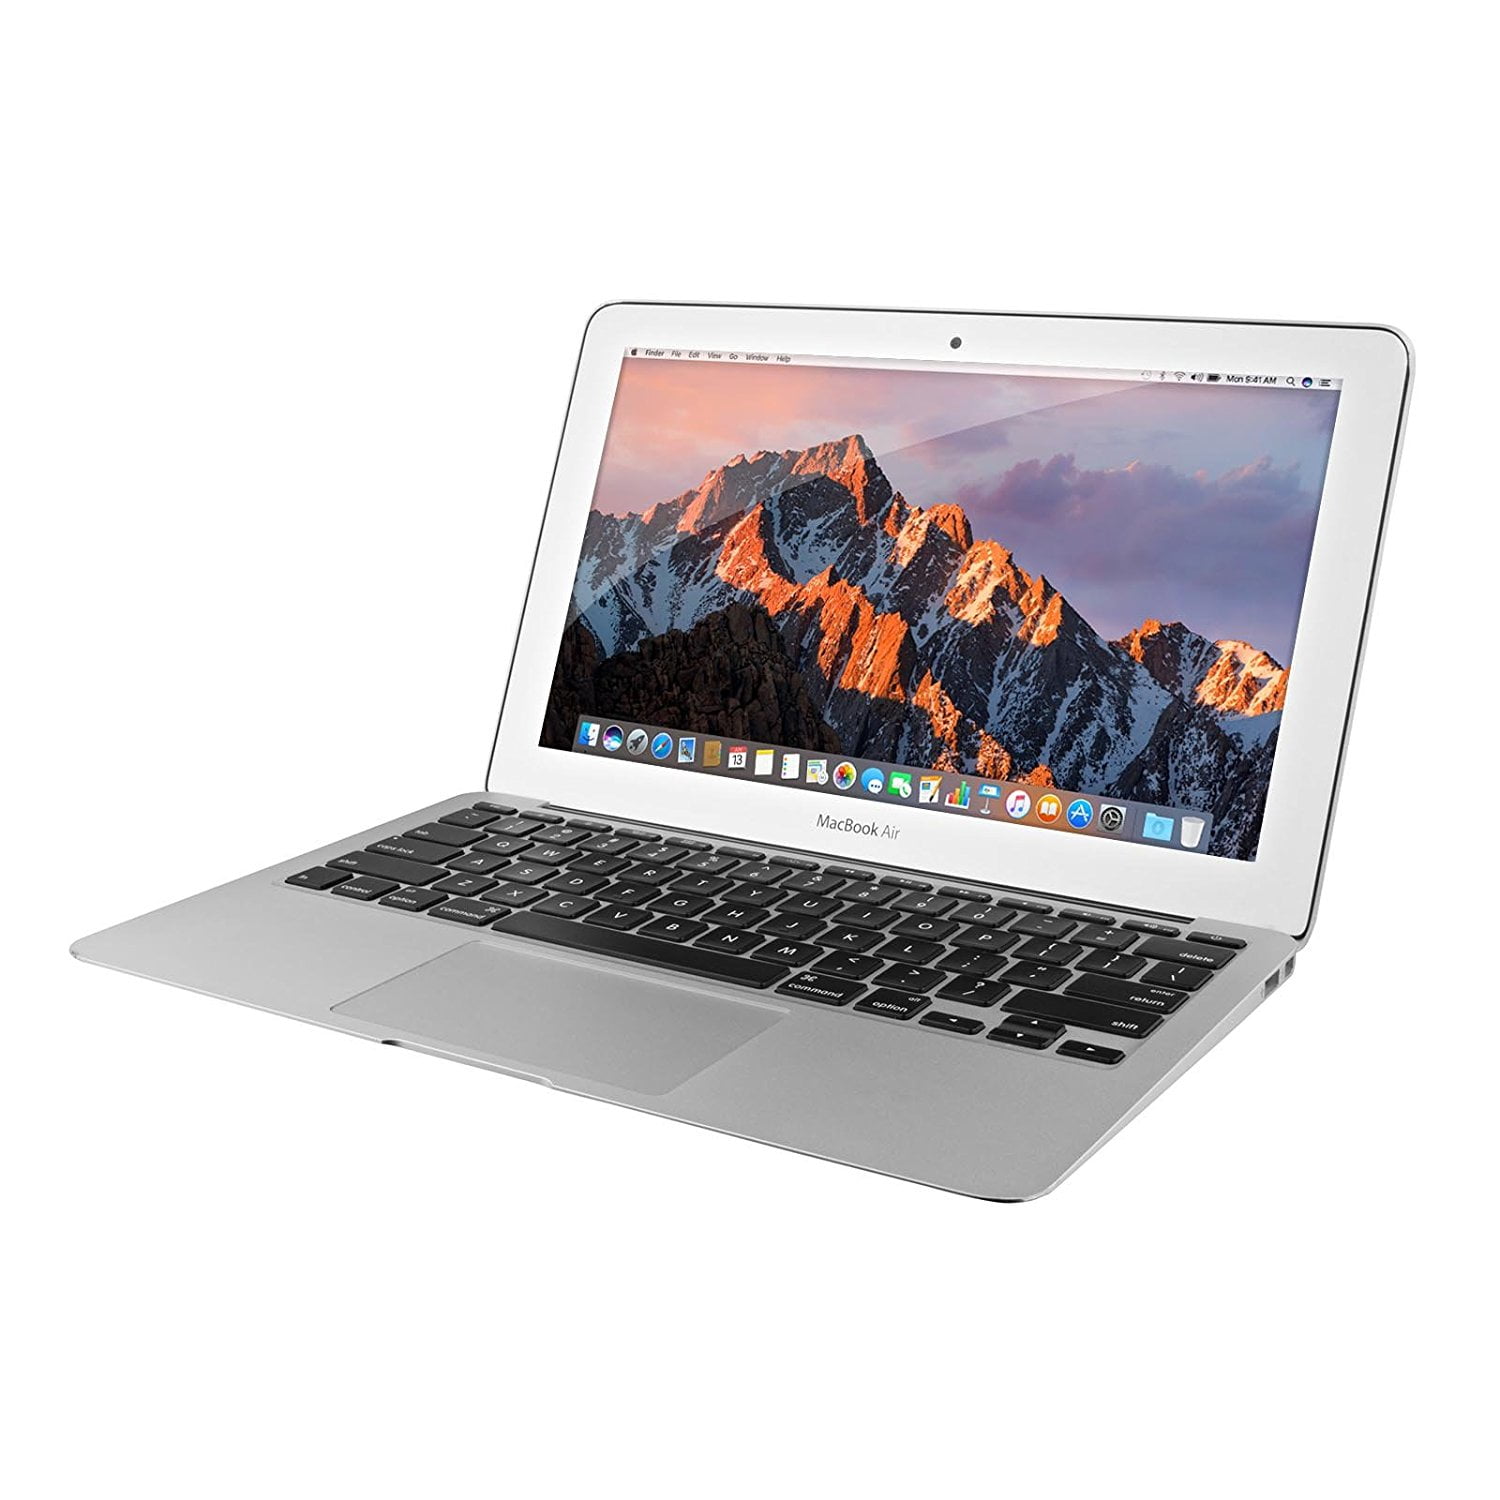 Apple Macbook Air 11 6 Inch 4gb Ram 128gb Ssd 1 6ghz Intel Core I5 Mjvm2ll A Early 15 Silver Scratch And Dent Walmart Com Walmart Com